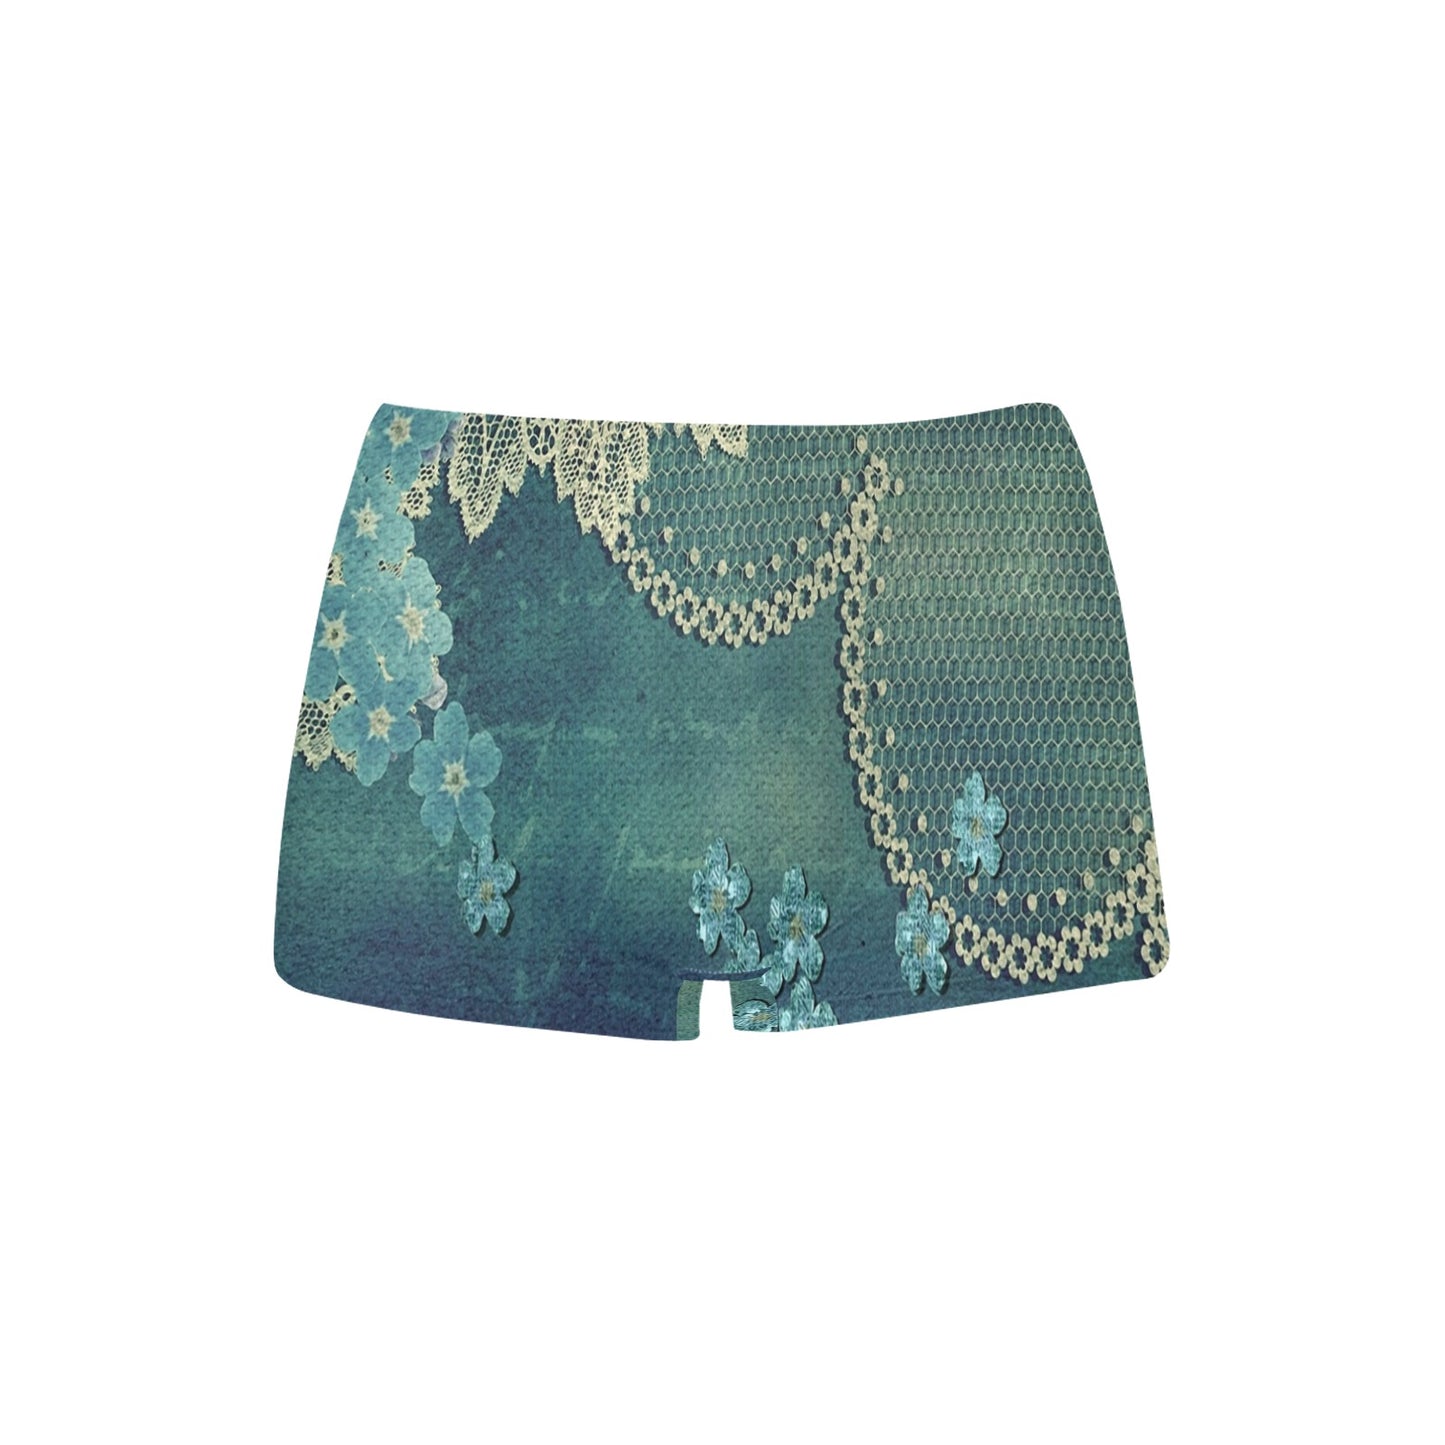 Printed Lace Boyshorts, daisy dukes, pum pum shorts, shortie shorts , design 04